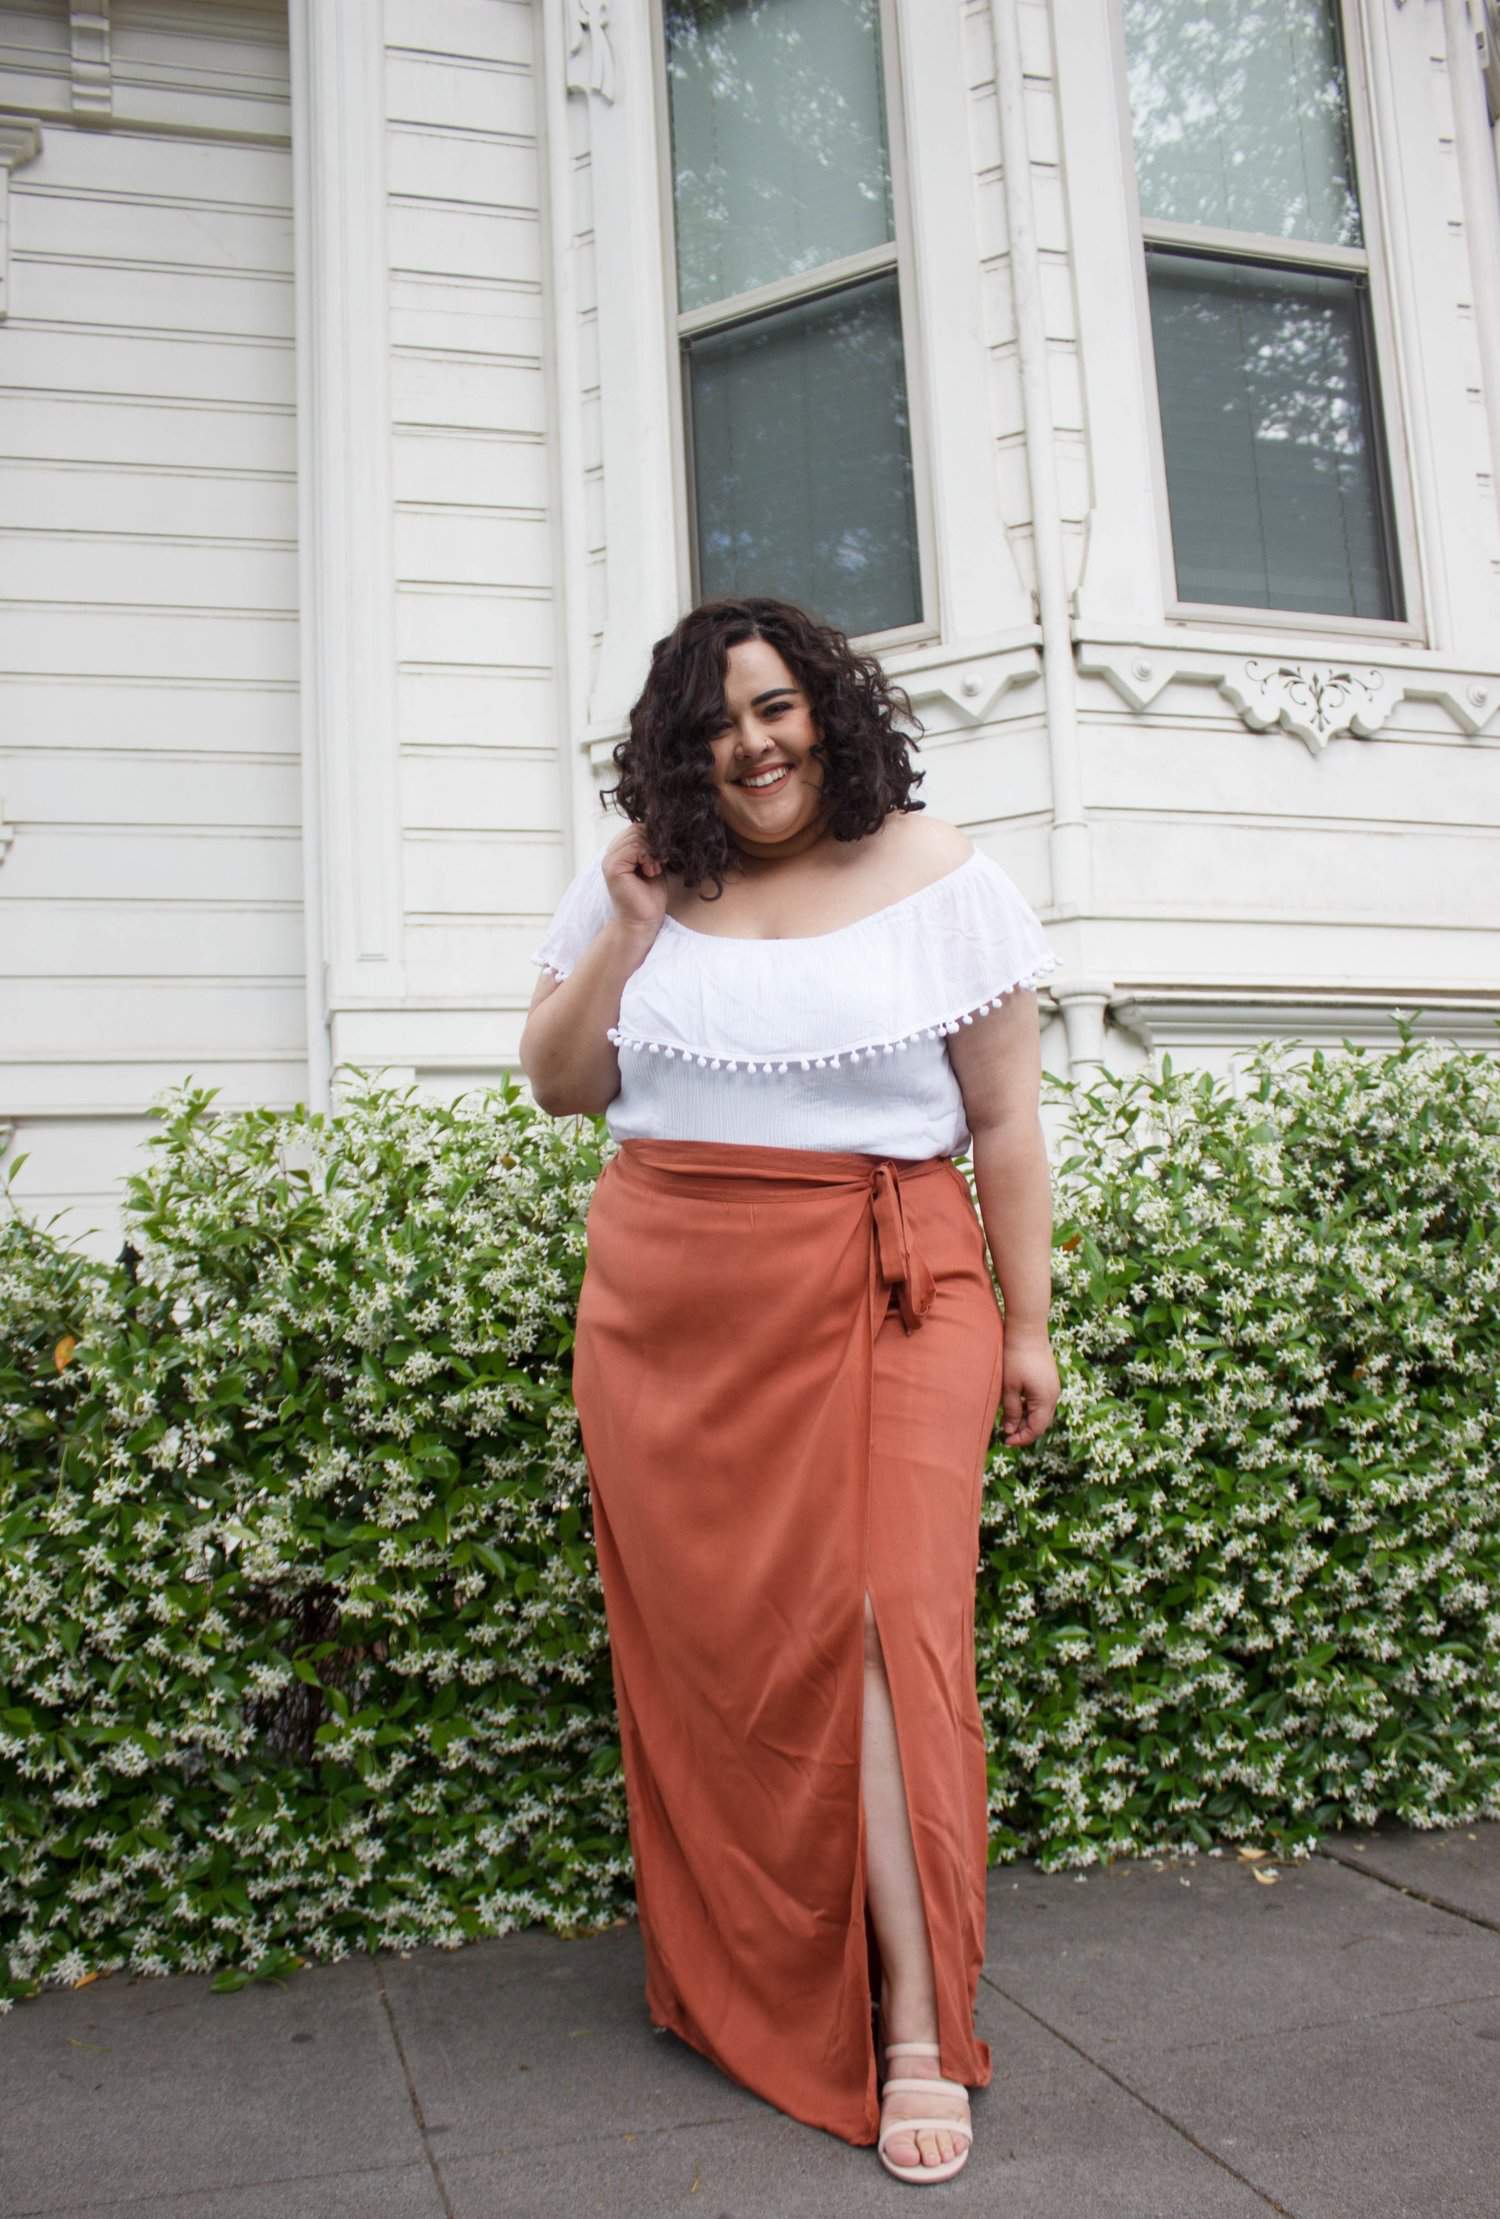 Plus Size Fashion Blogger- Mona of The Smiling Sweetheart